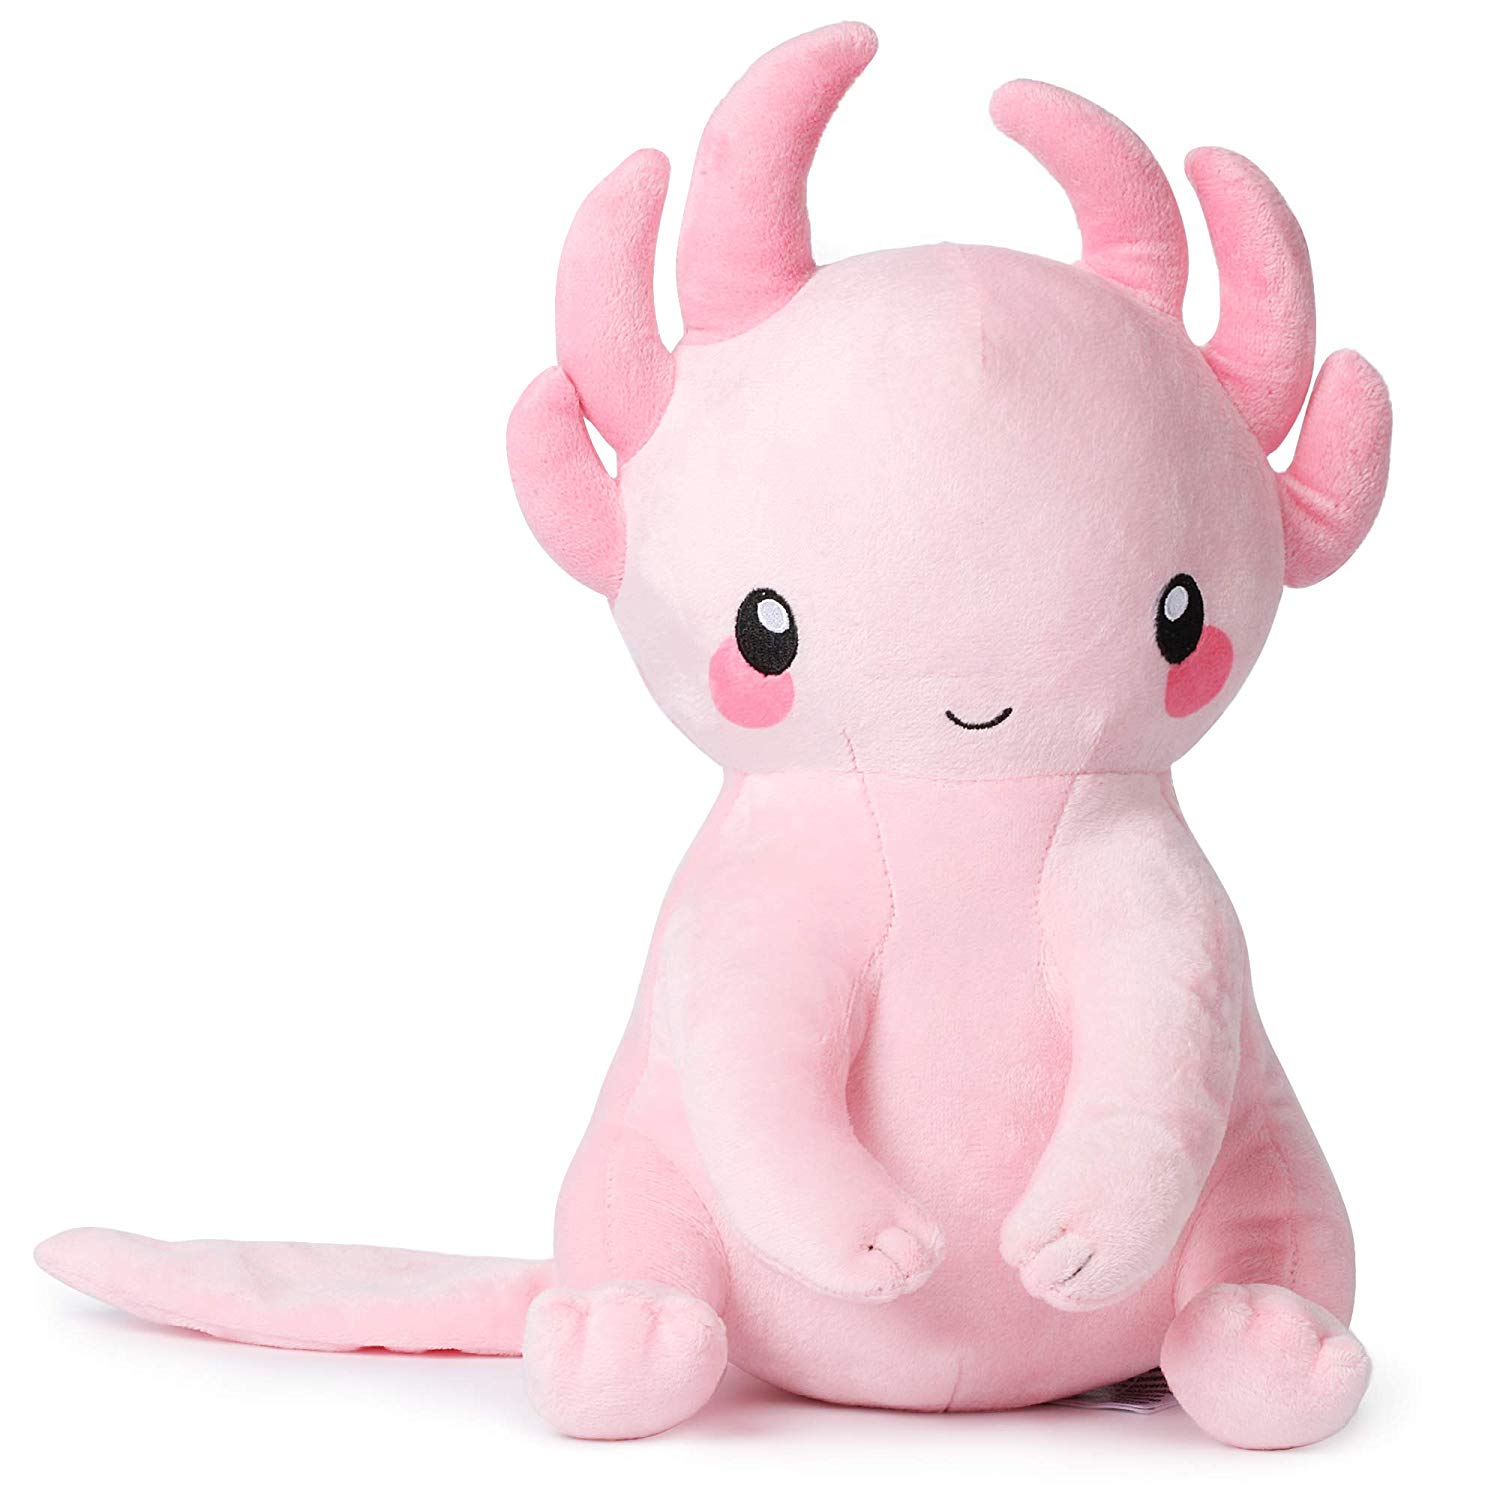 Stuffed Toy Cuddly Plush Animal for Babies corimori 1849 Toddlers 26cm Spotl The Axolotl Pink 